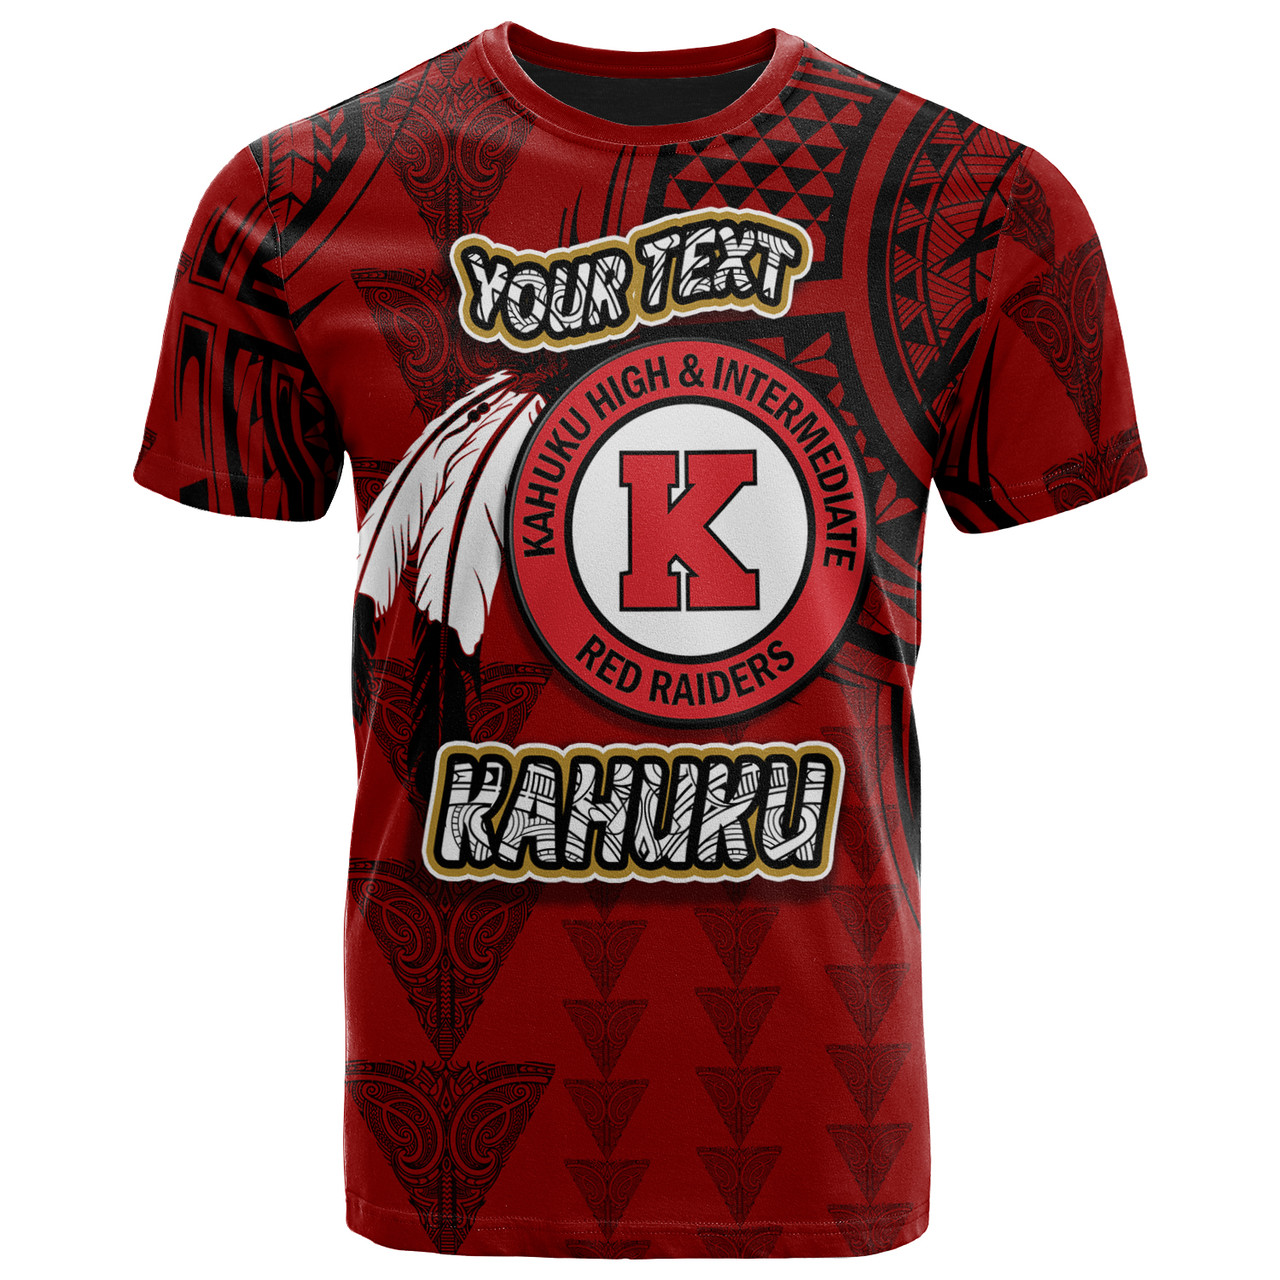 Hawaii Kahuku High & Intermediate School Custom T- Shirt - Hawaii Kahuku High School Polynesian With Triangle Stylized Pattern